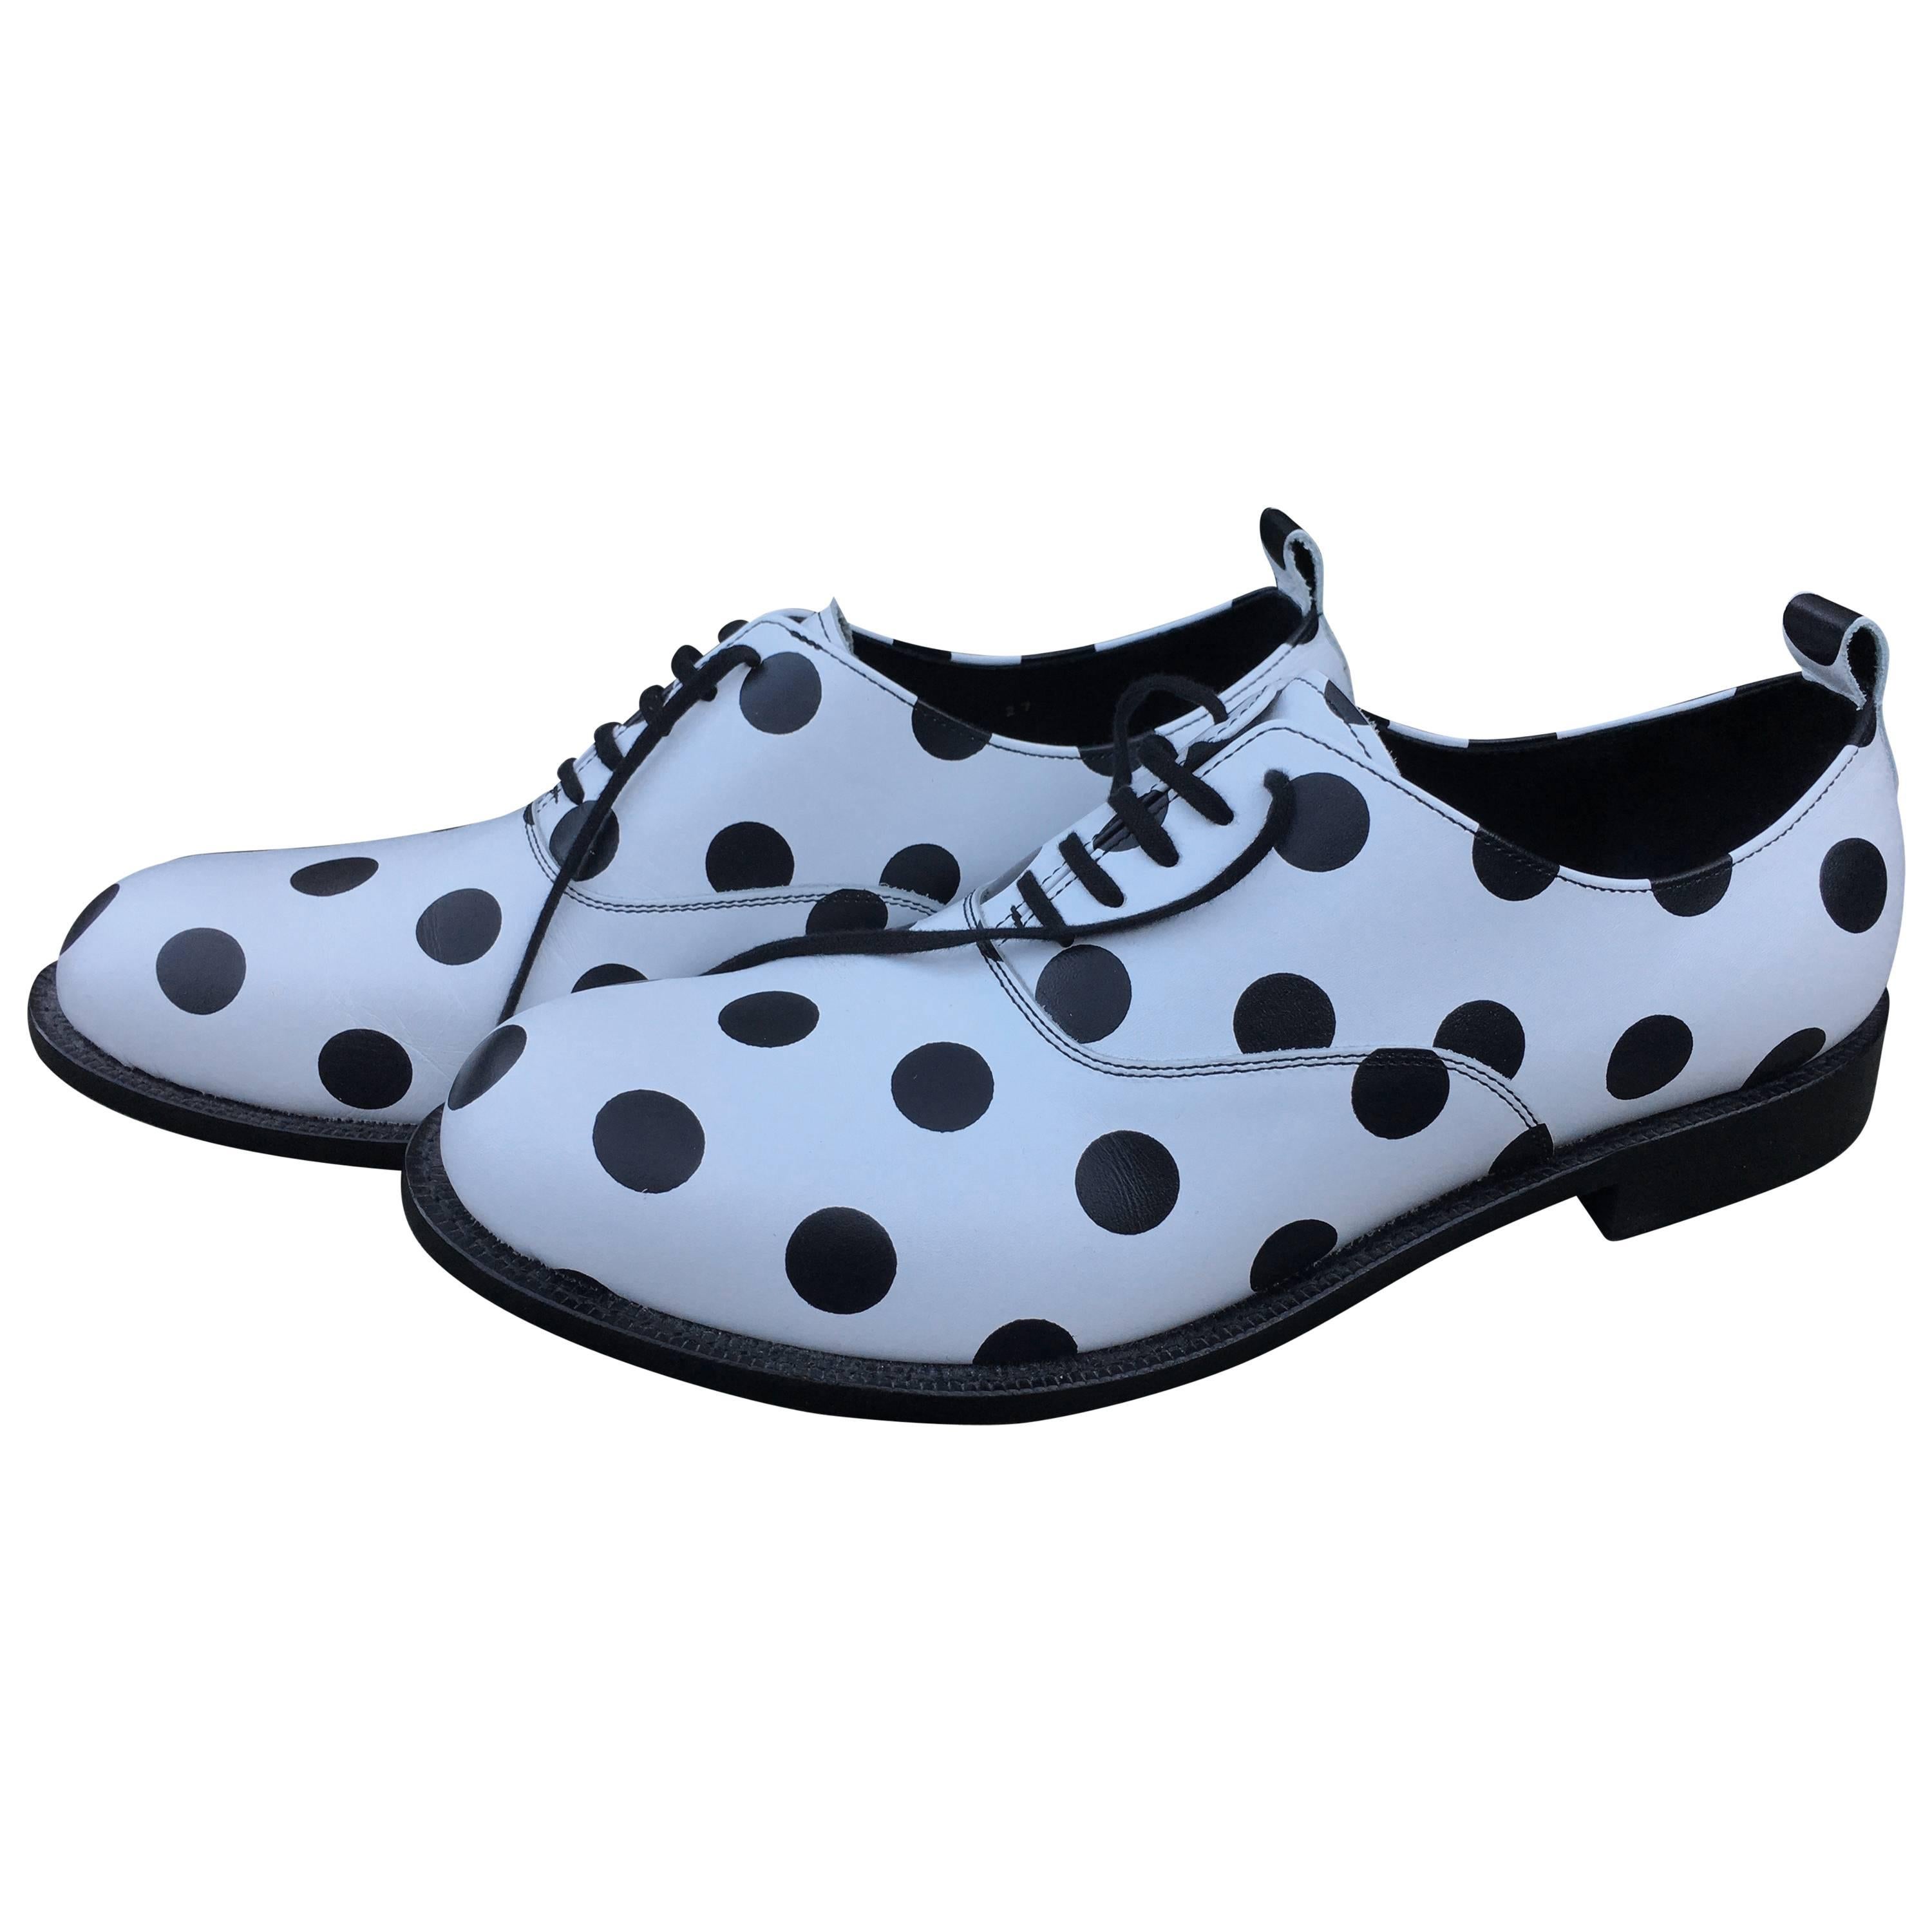 Comme des Garcons Mens Polka Dot Shoes New Size 9.5 US For Sale